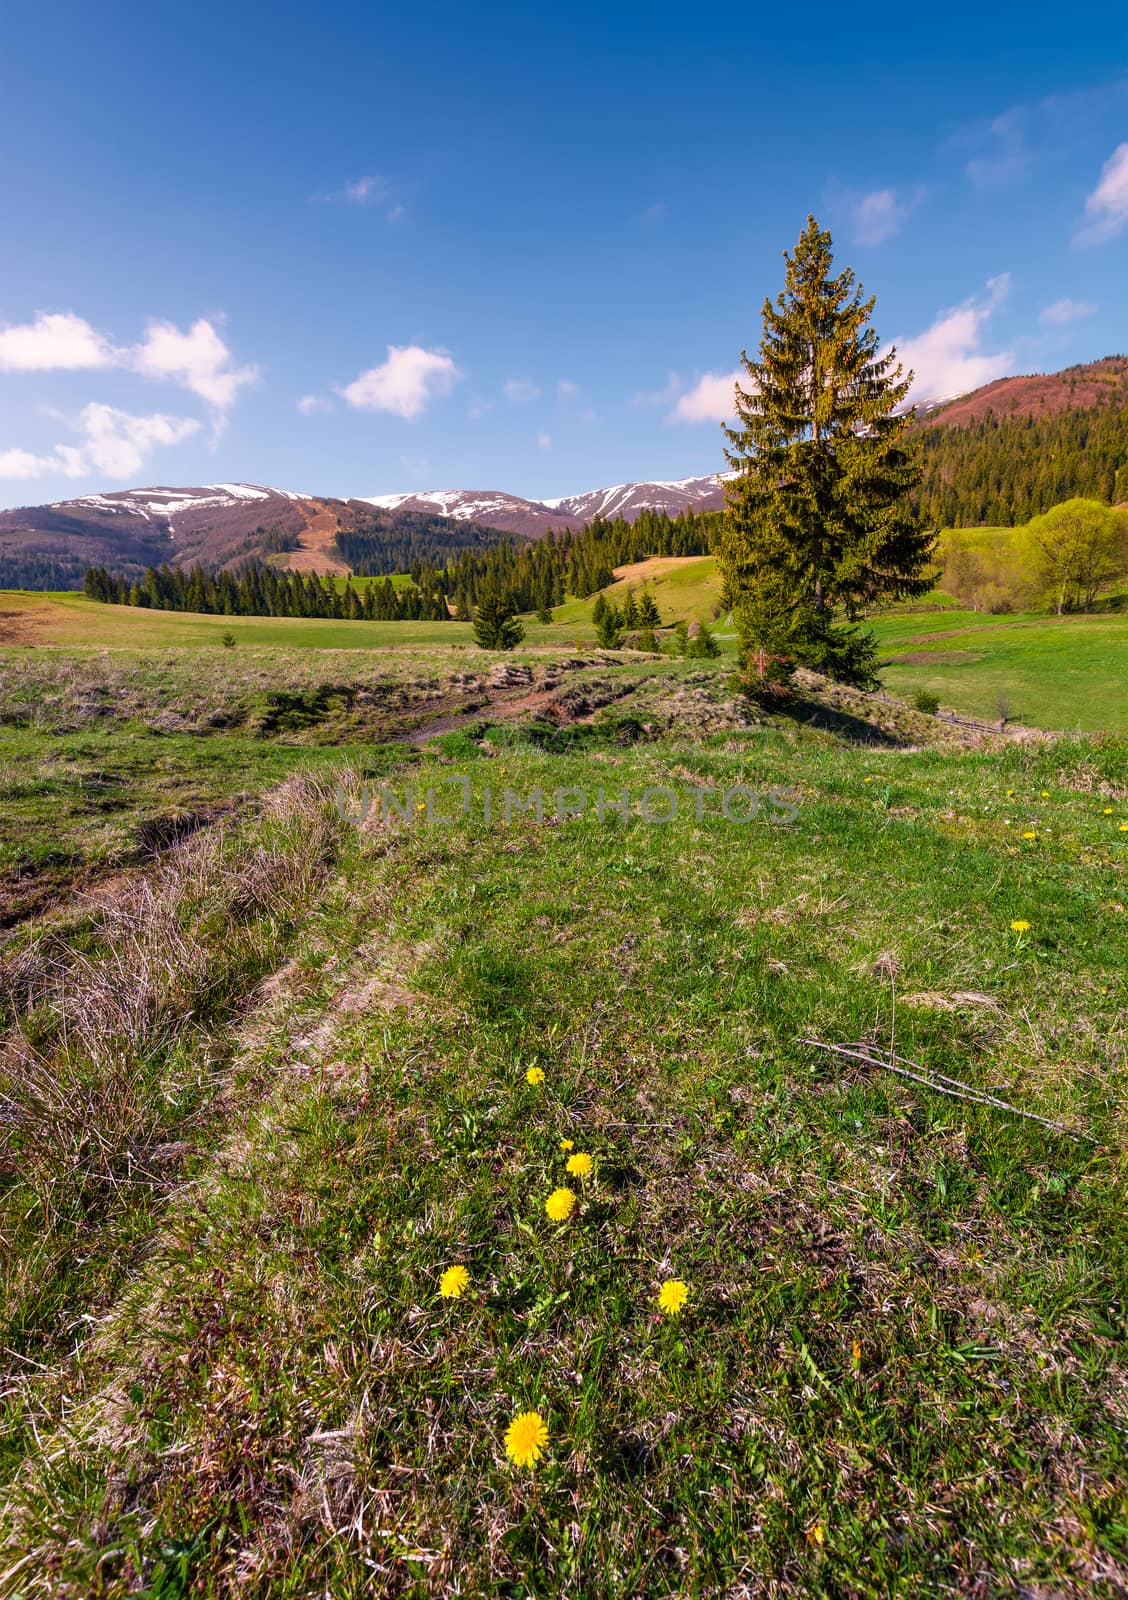 dandelions on grassy slopes in springtime by Pellinni